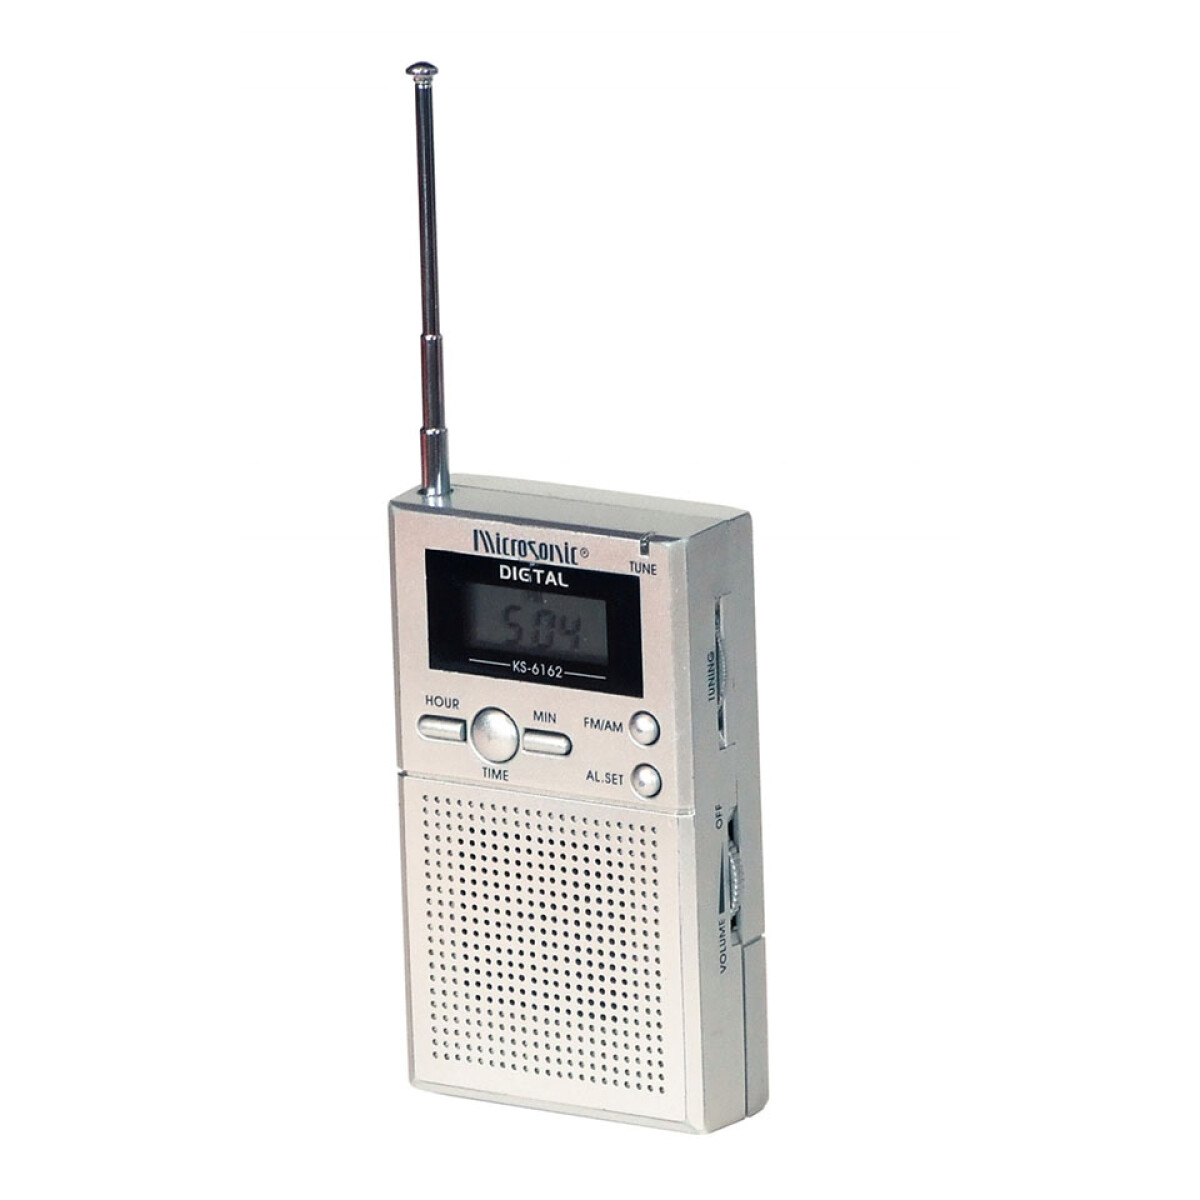 Radio Bolsillo Microsonic RAD6162 